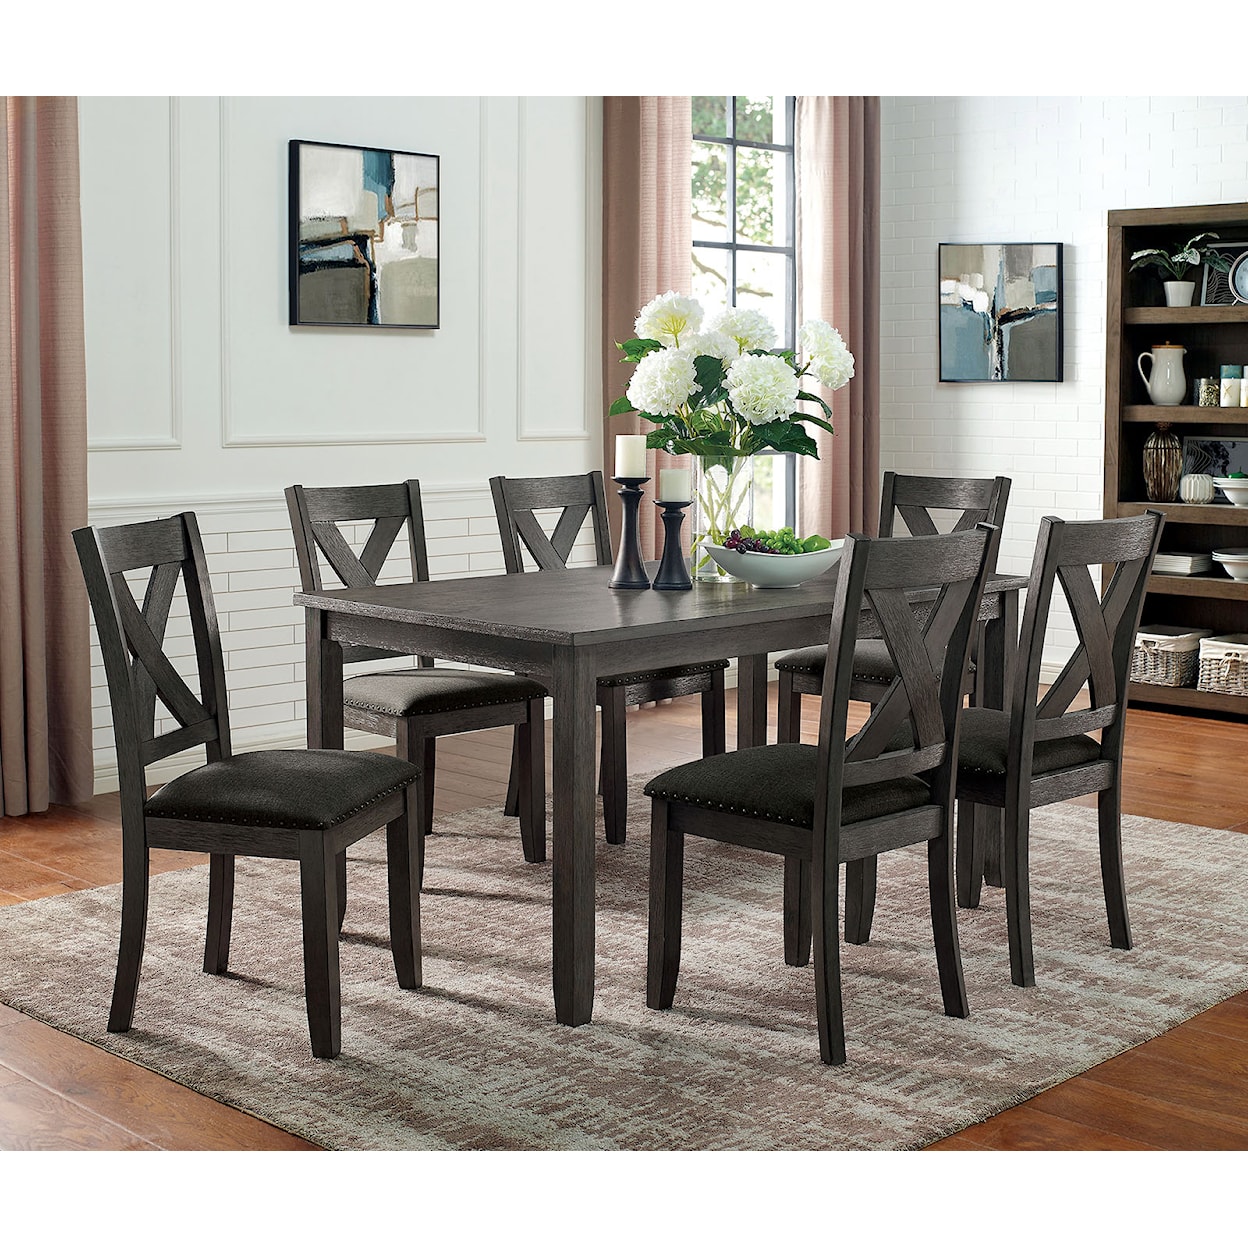 Furniture of America Cilgerran 7-Piece Dining Table Set